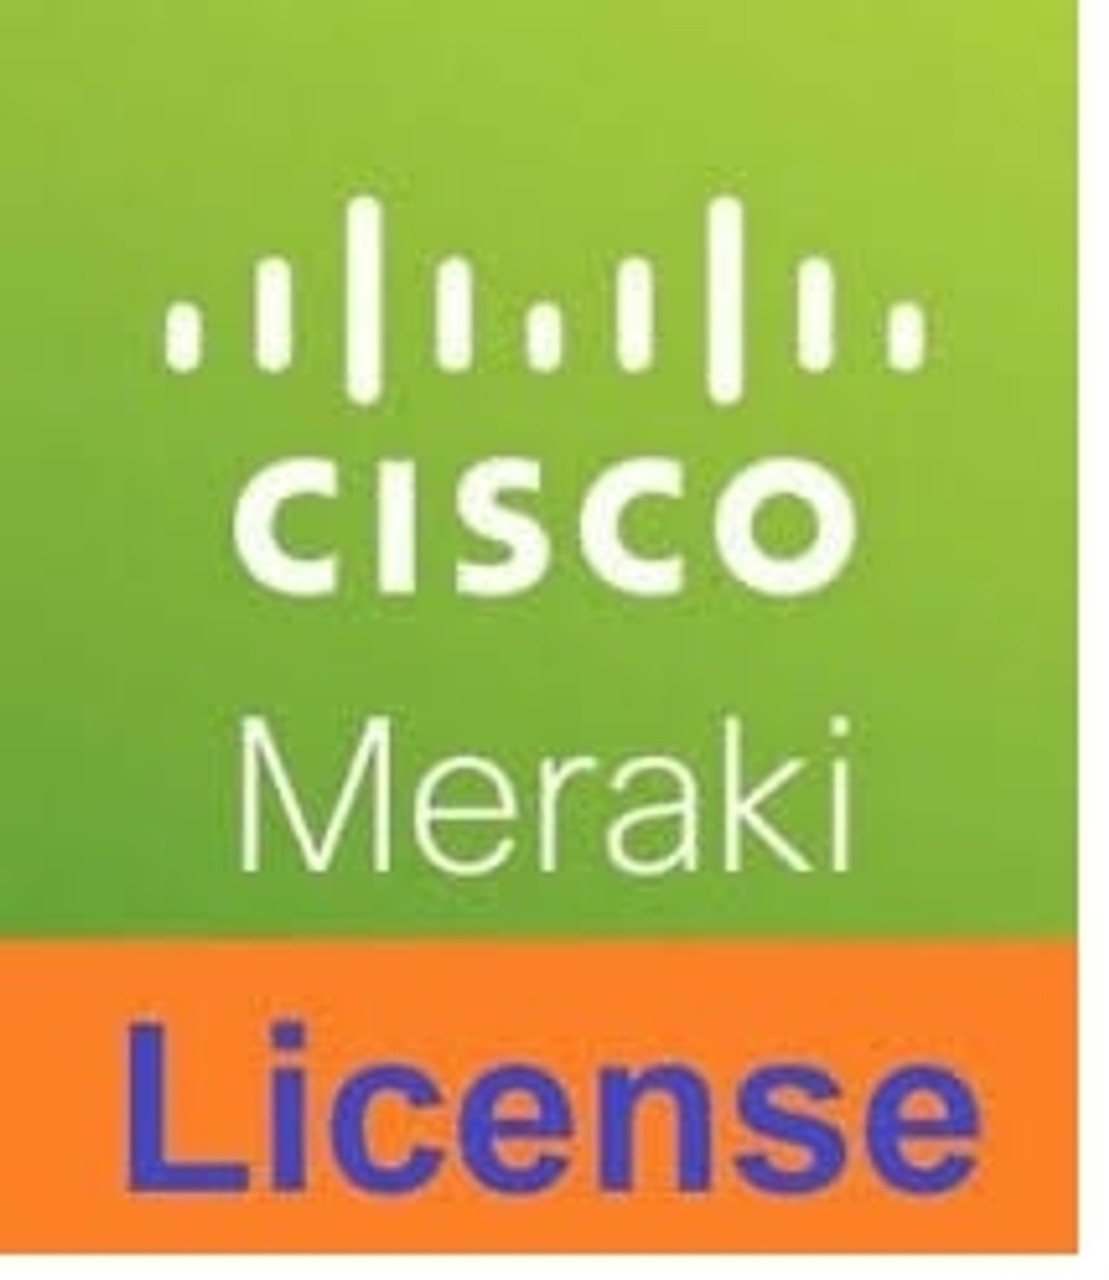 EOS Meraki MS320-24P Enterprise License and Support, 7 Year